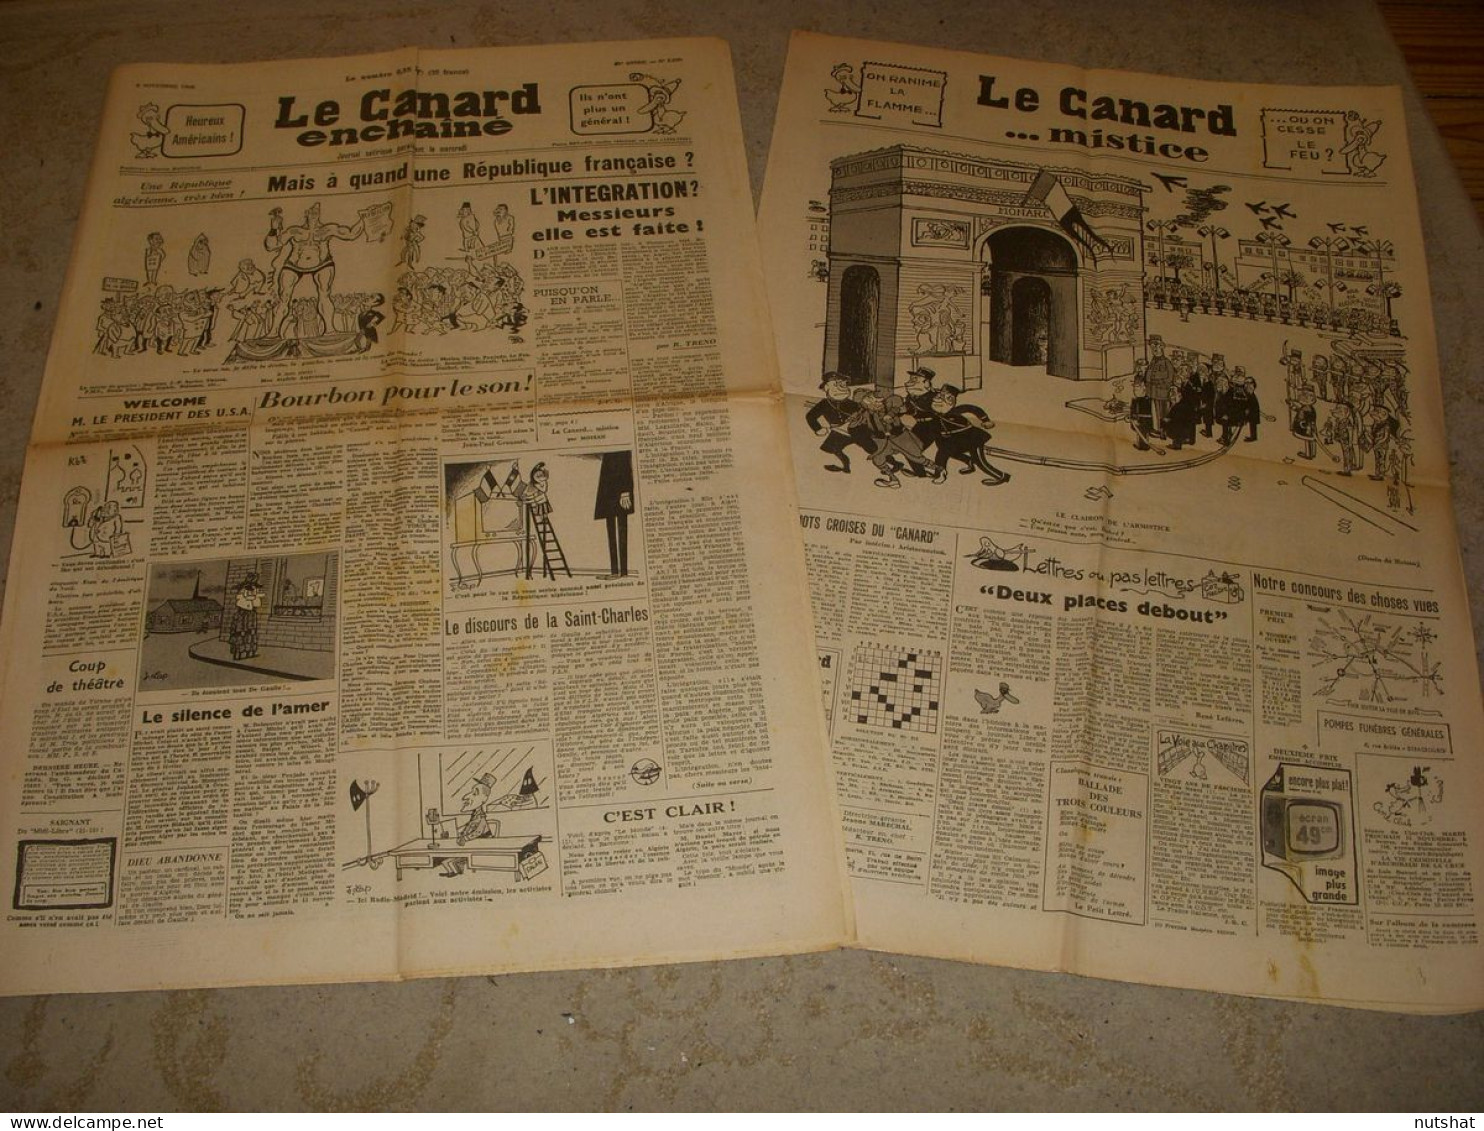 CANARD ENCHAINE 2090 09.11.1960 Pierre SABBAGH THEATRE RUY BLAS Louis MOLLION - Politiek